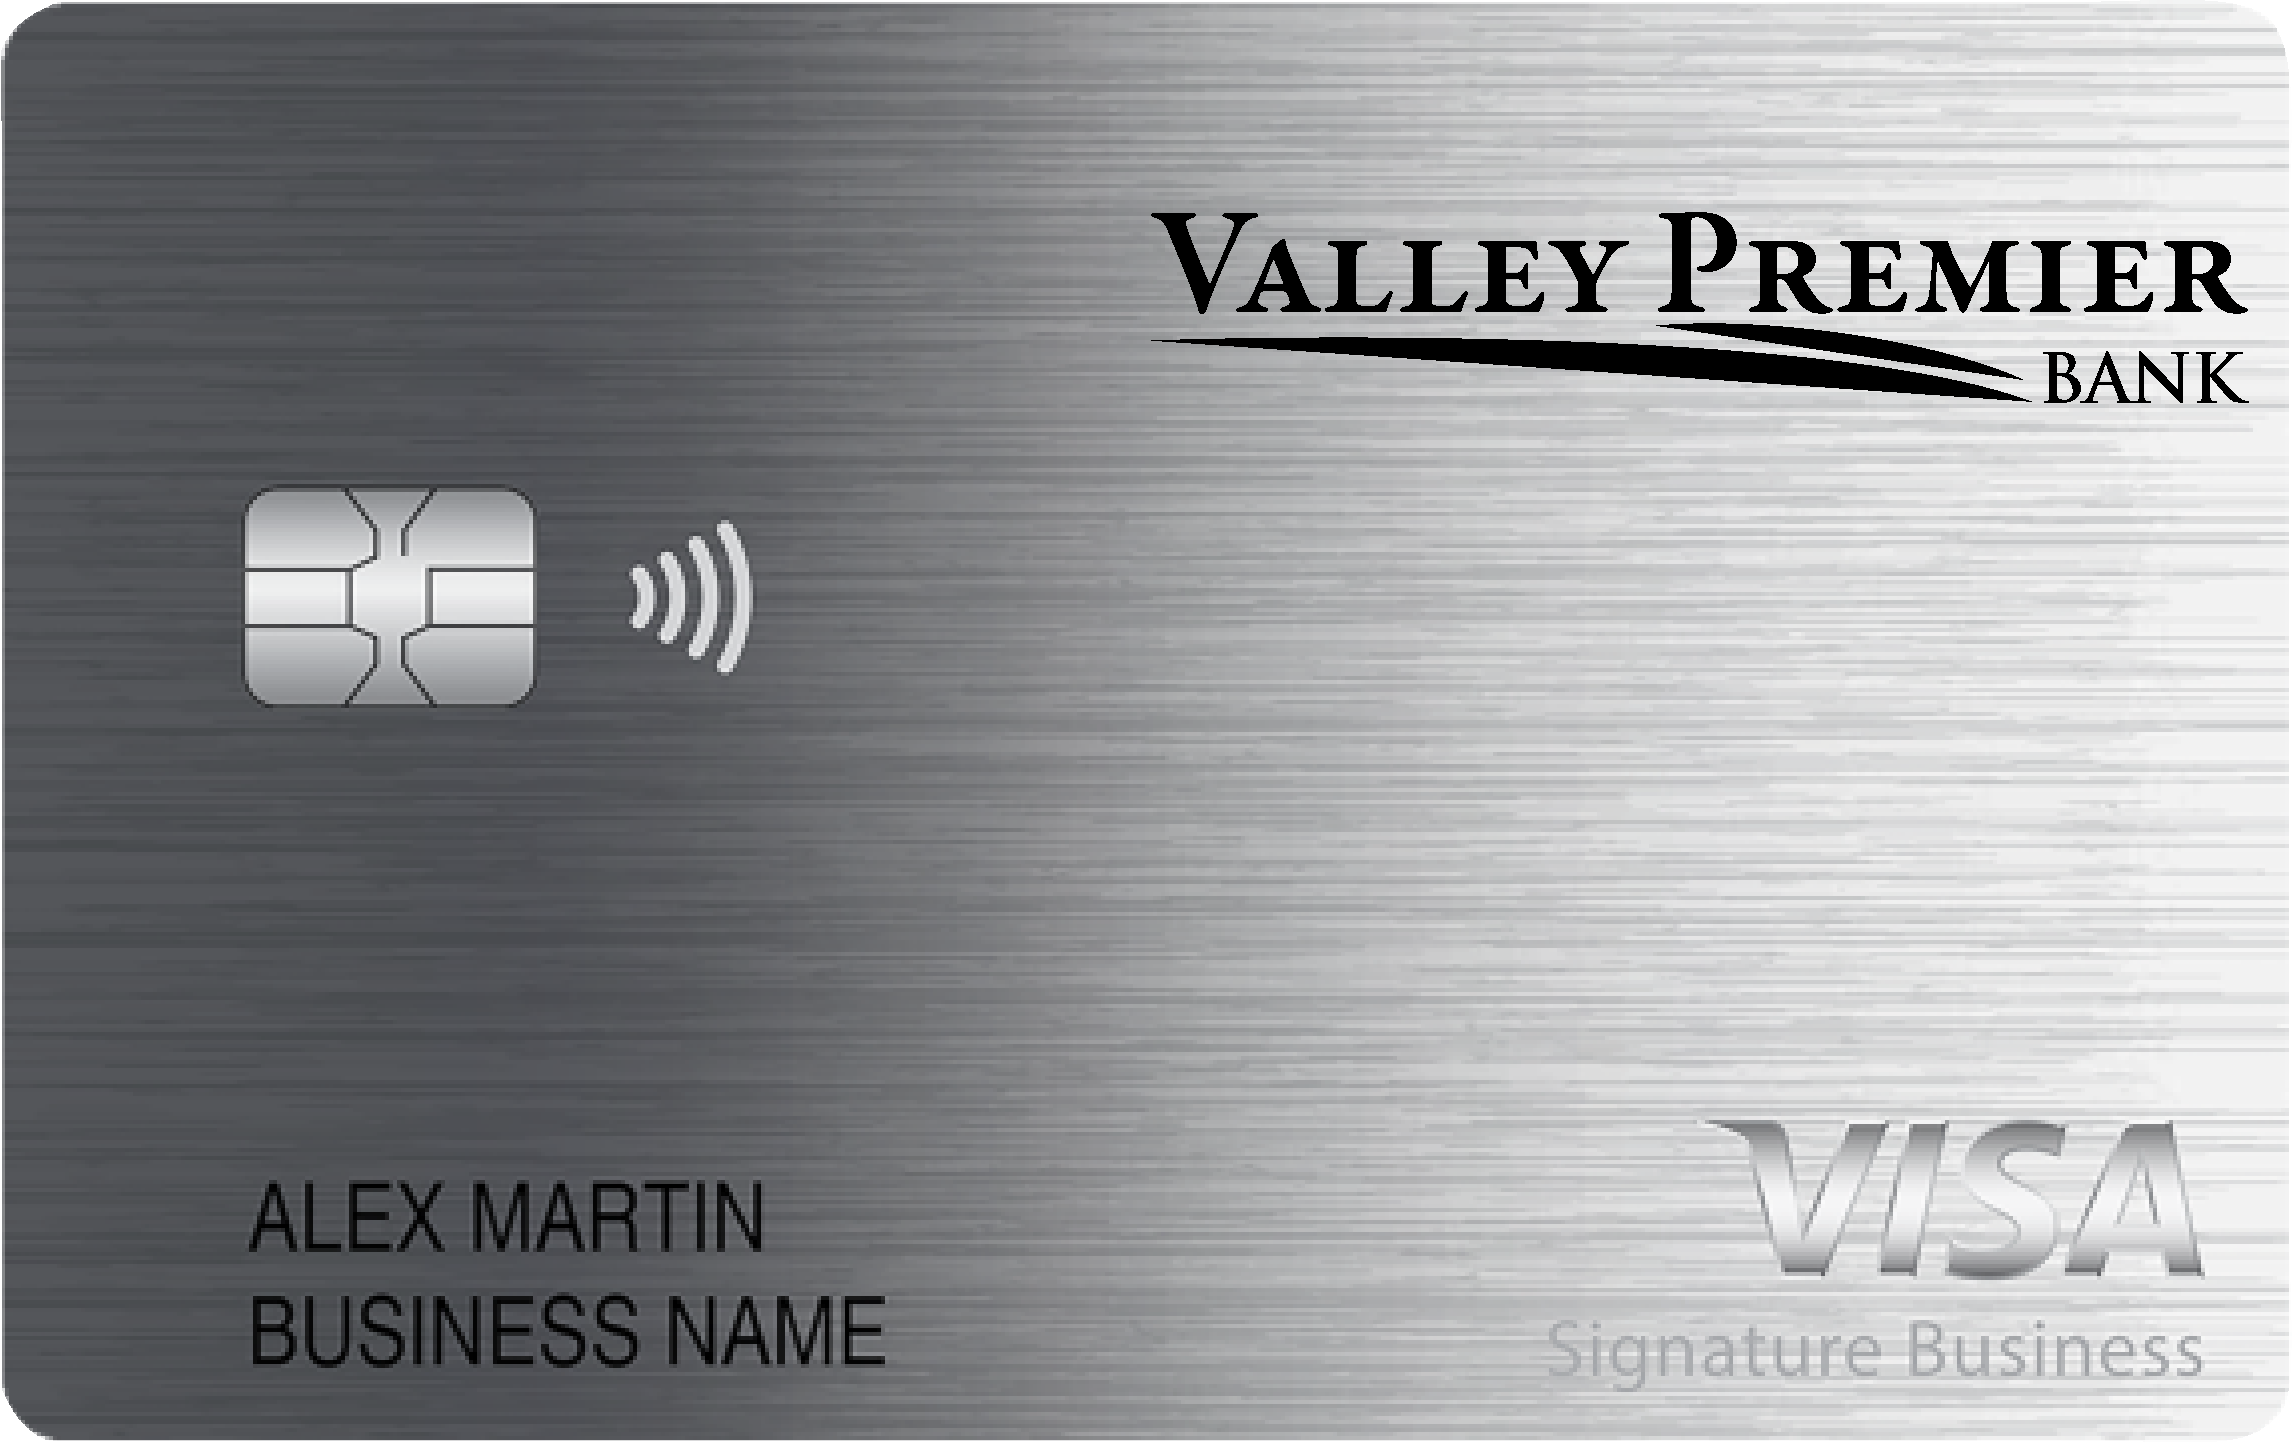 Valley Premier Bank Smart Business Rewards Card